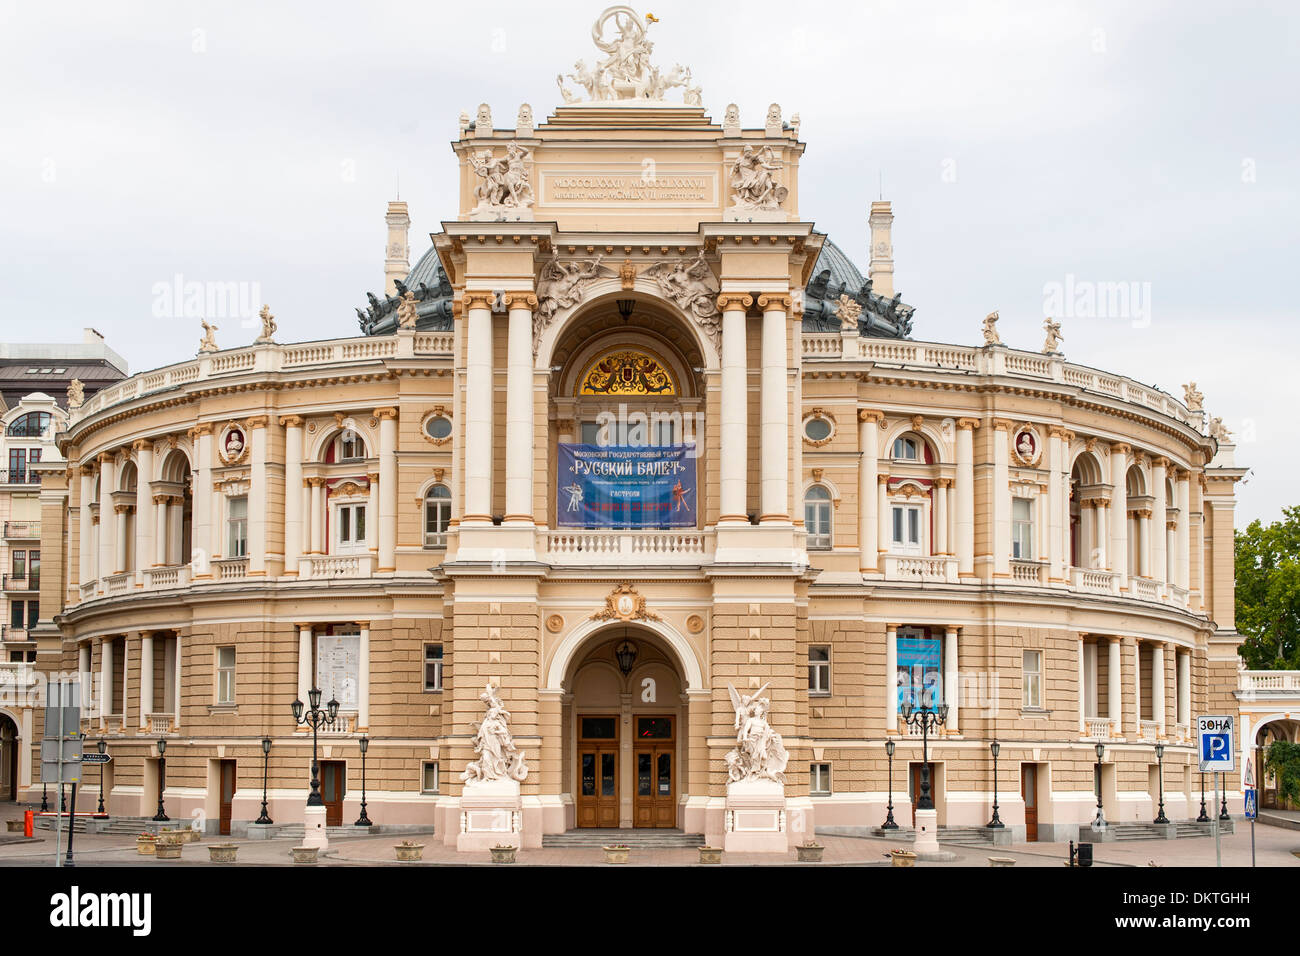 The Odessa Opera house and ballet theater in Odessa, Ukraine. Stock Photo